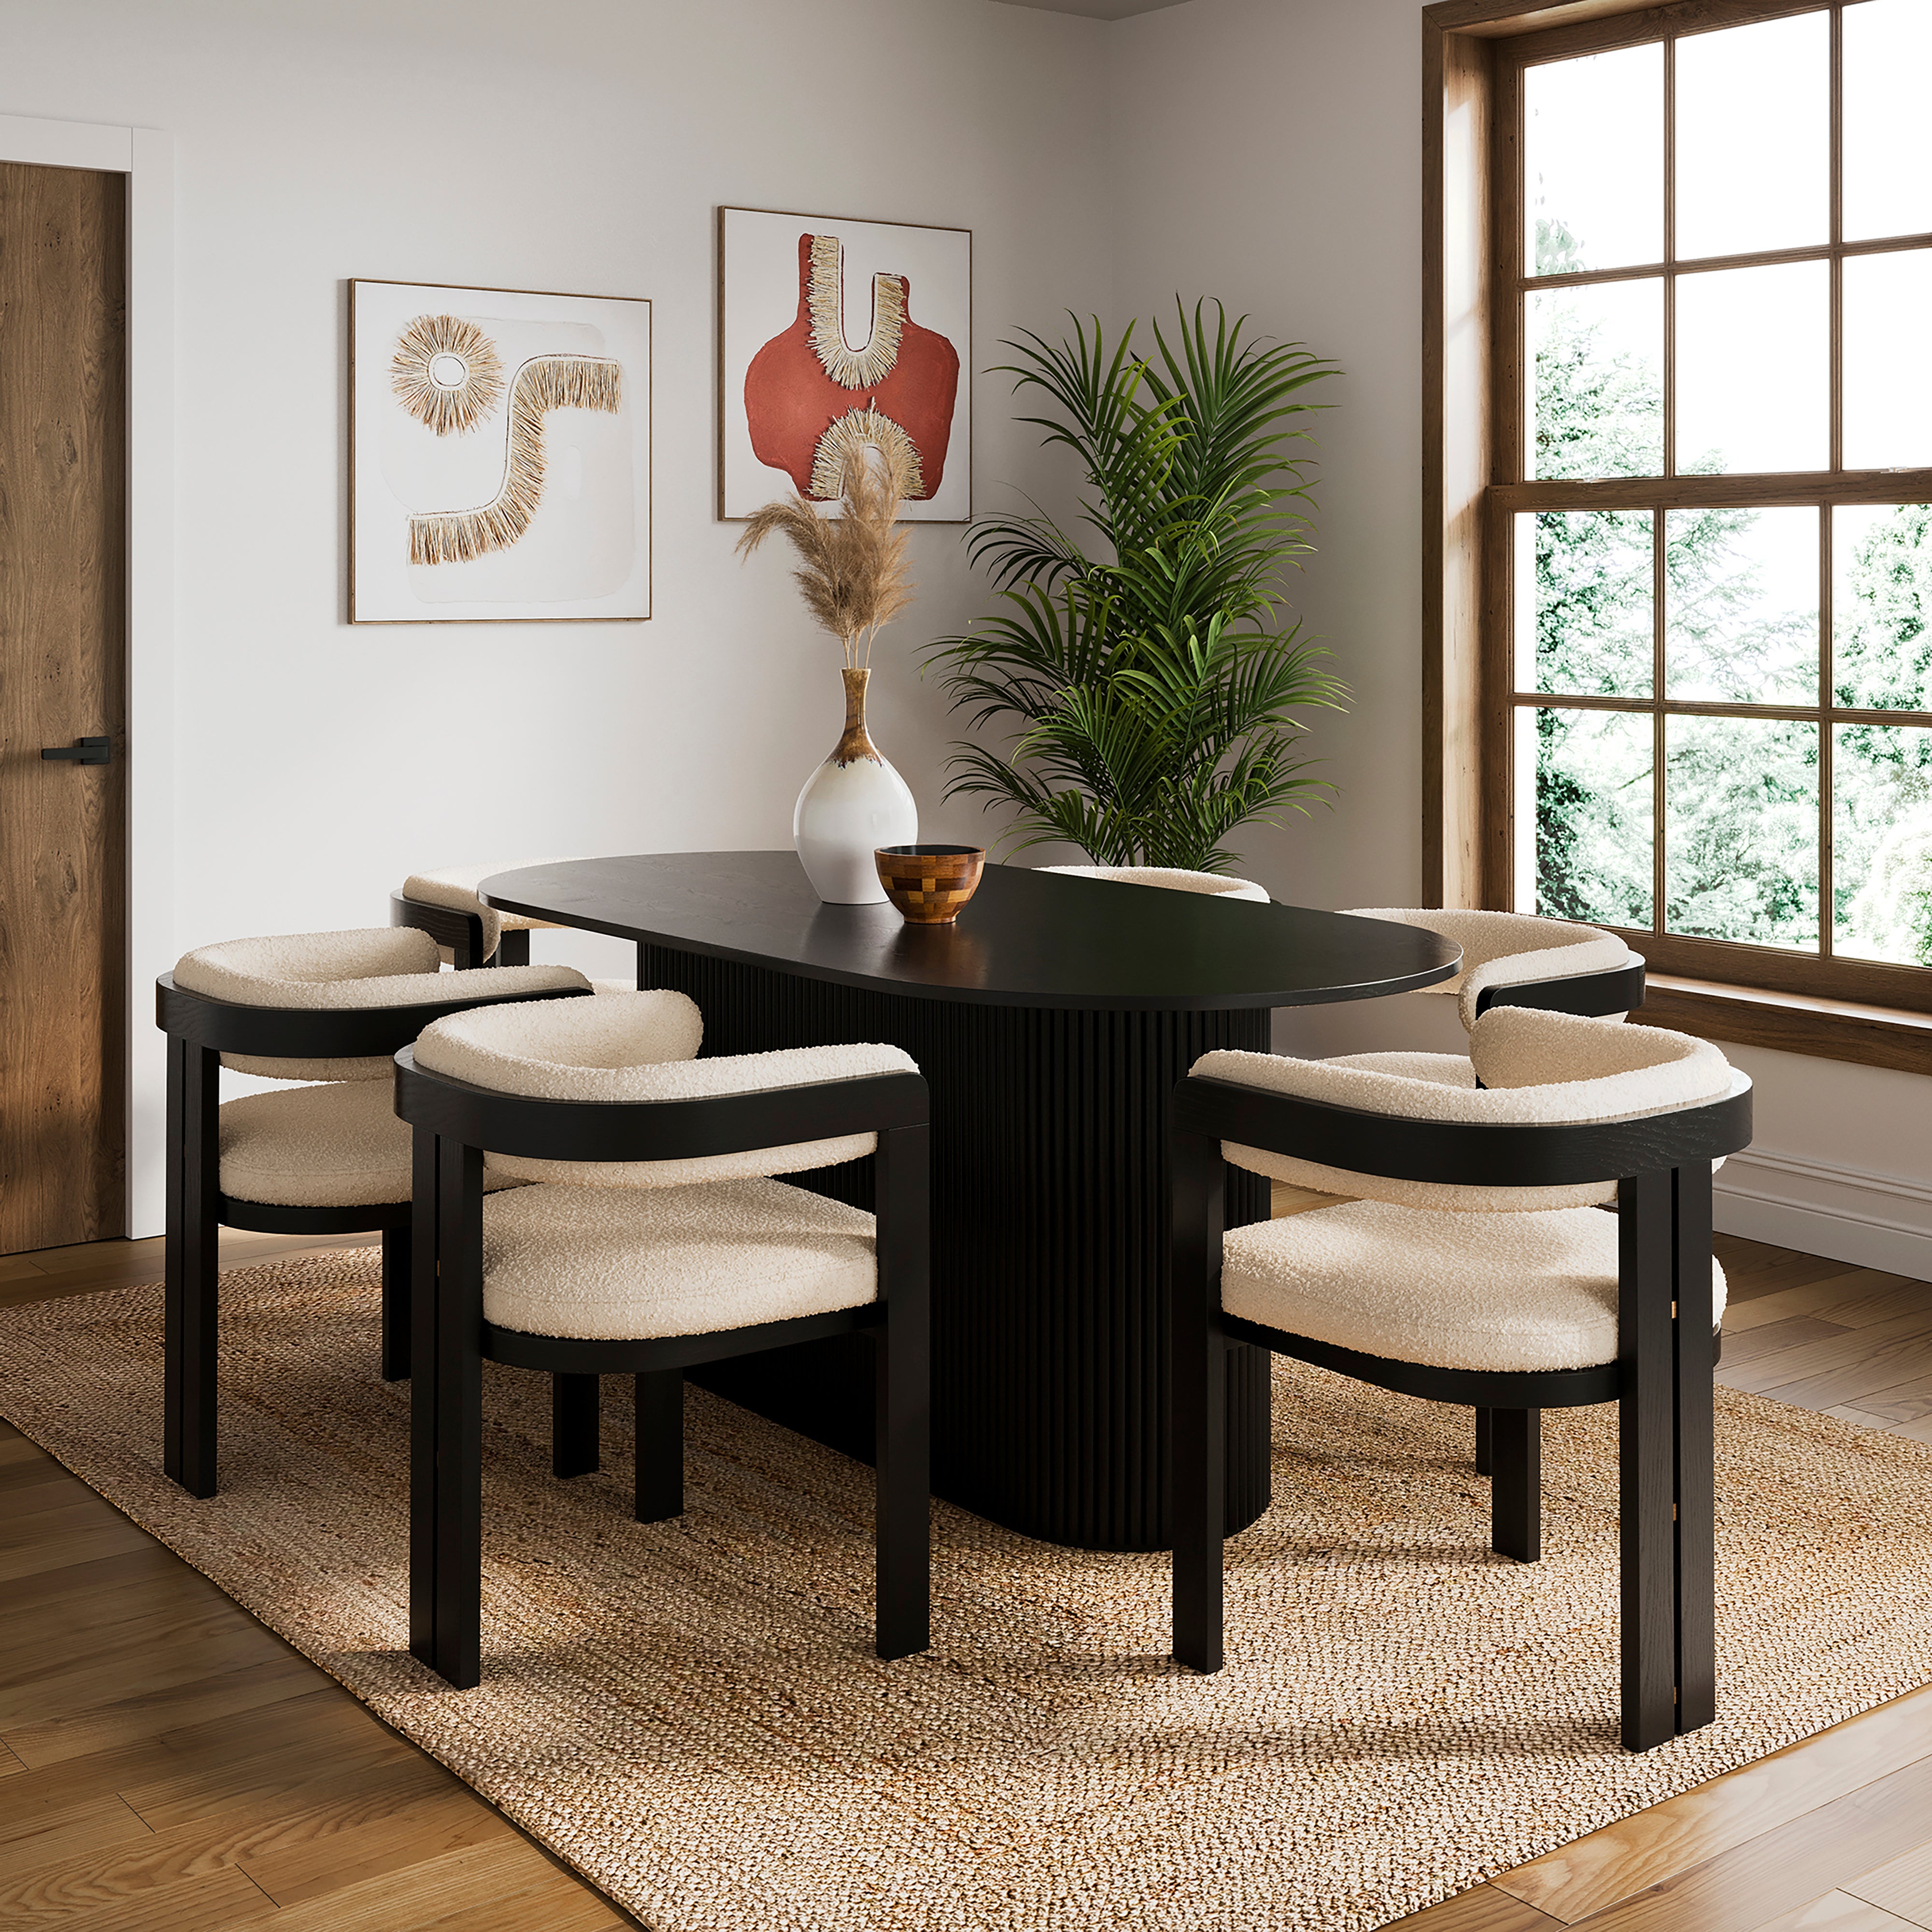 Amari 6 Seater Oval Dining Table, Wood